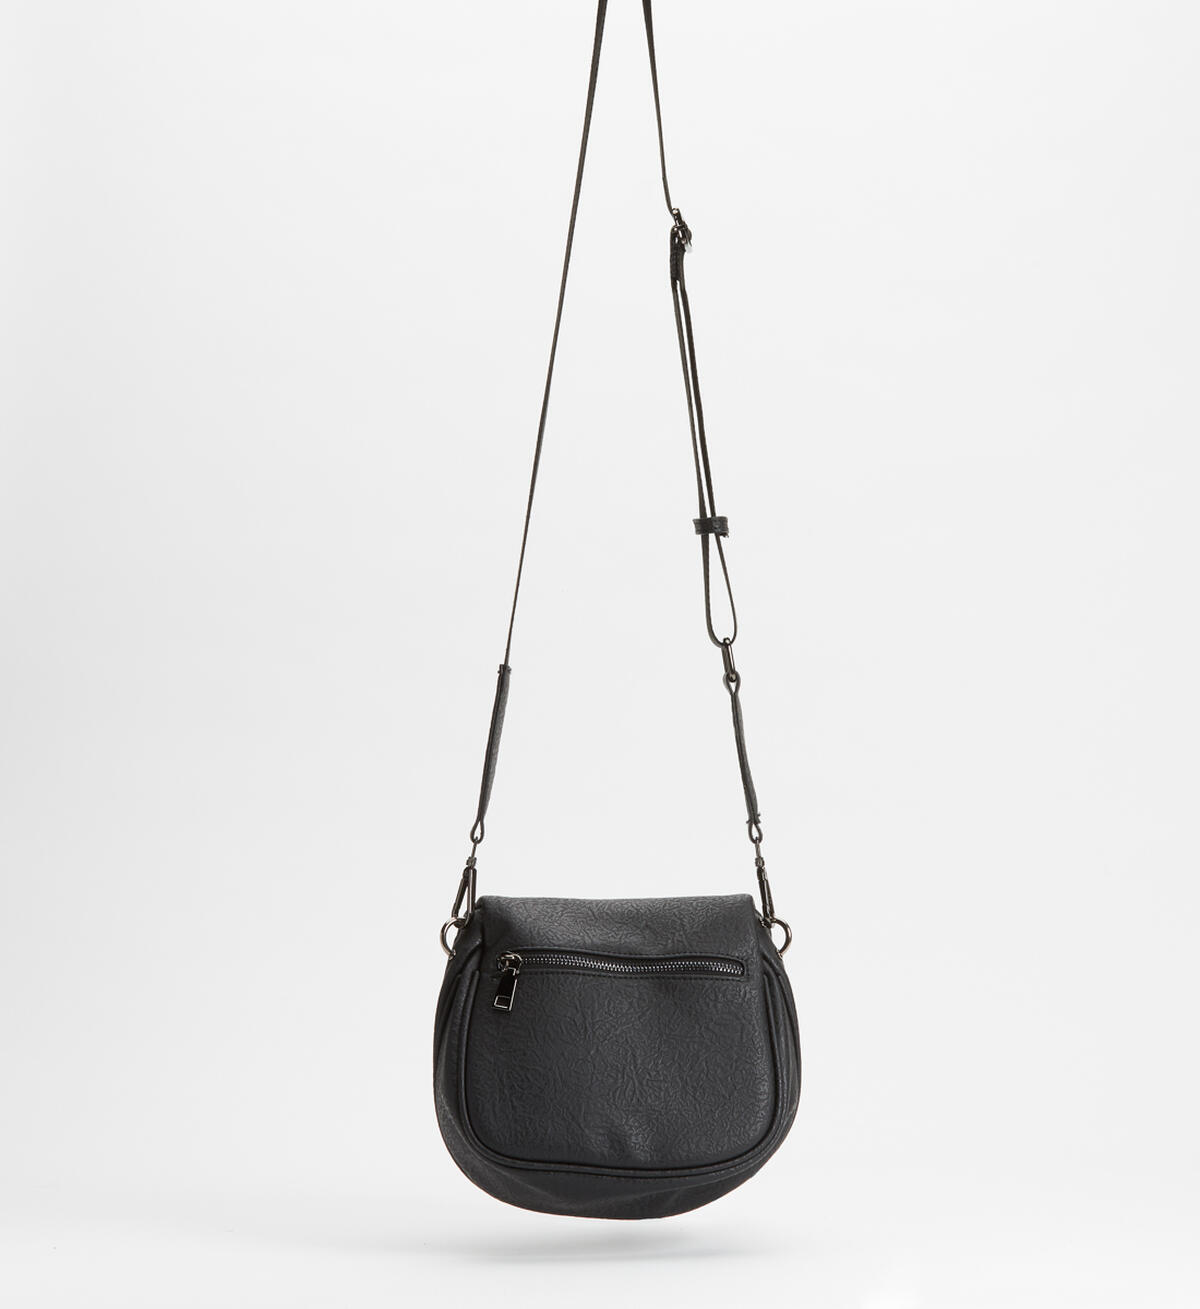 Zip Saddle Bag, Black, hi-res image number 1